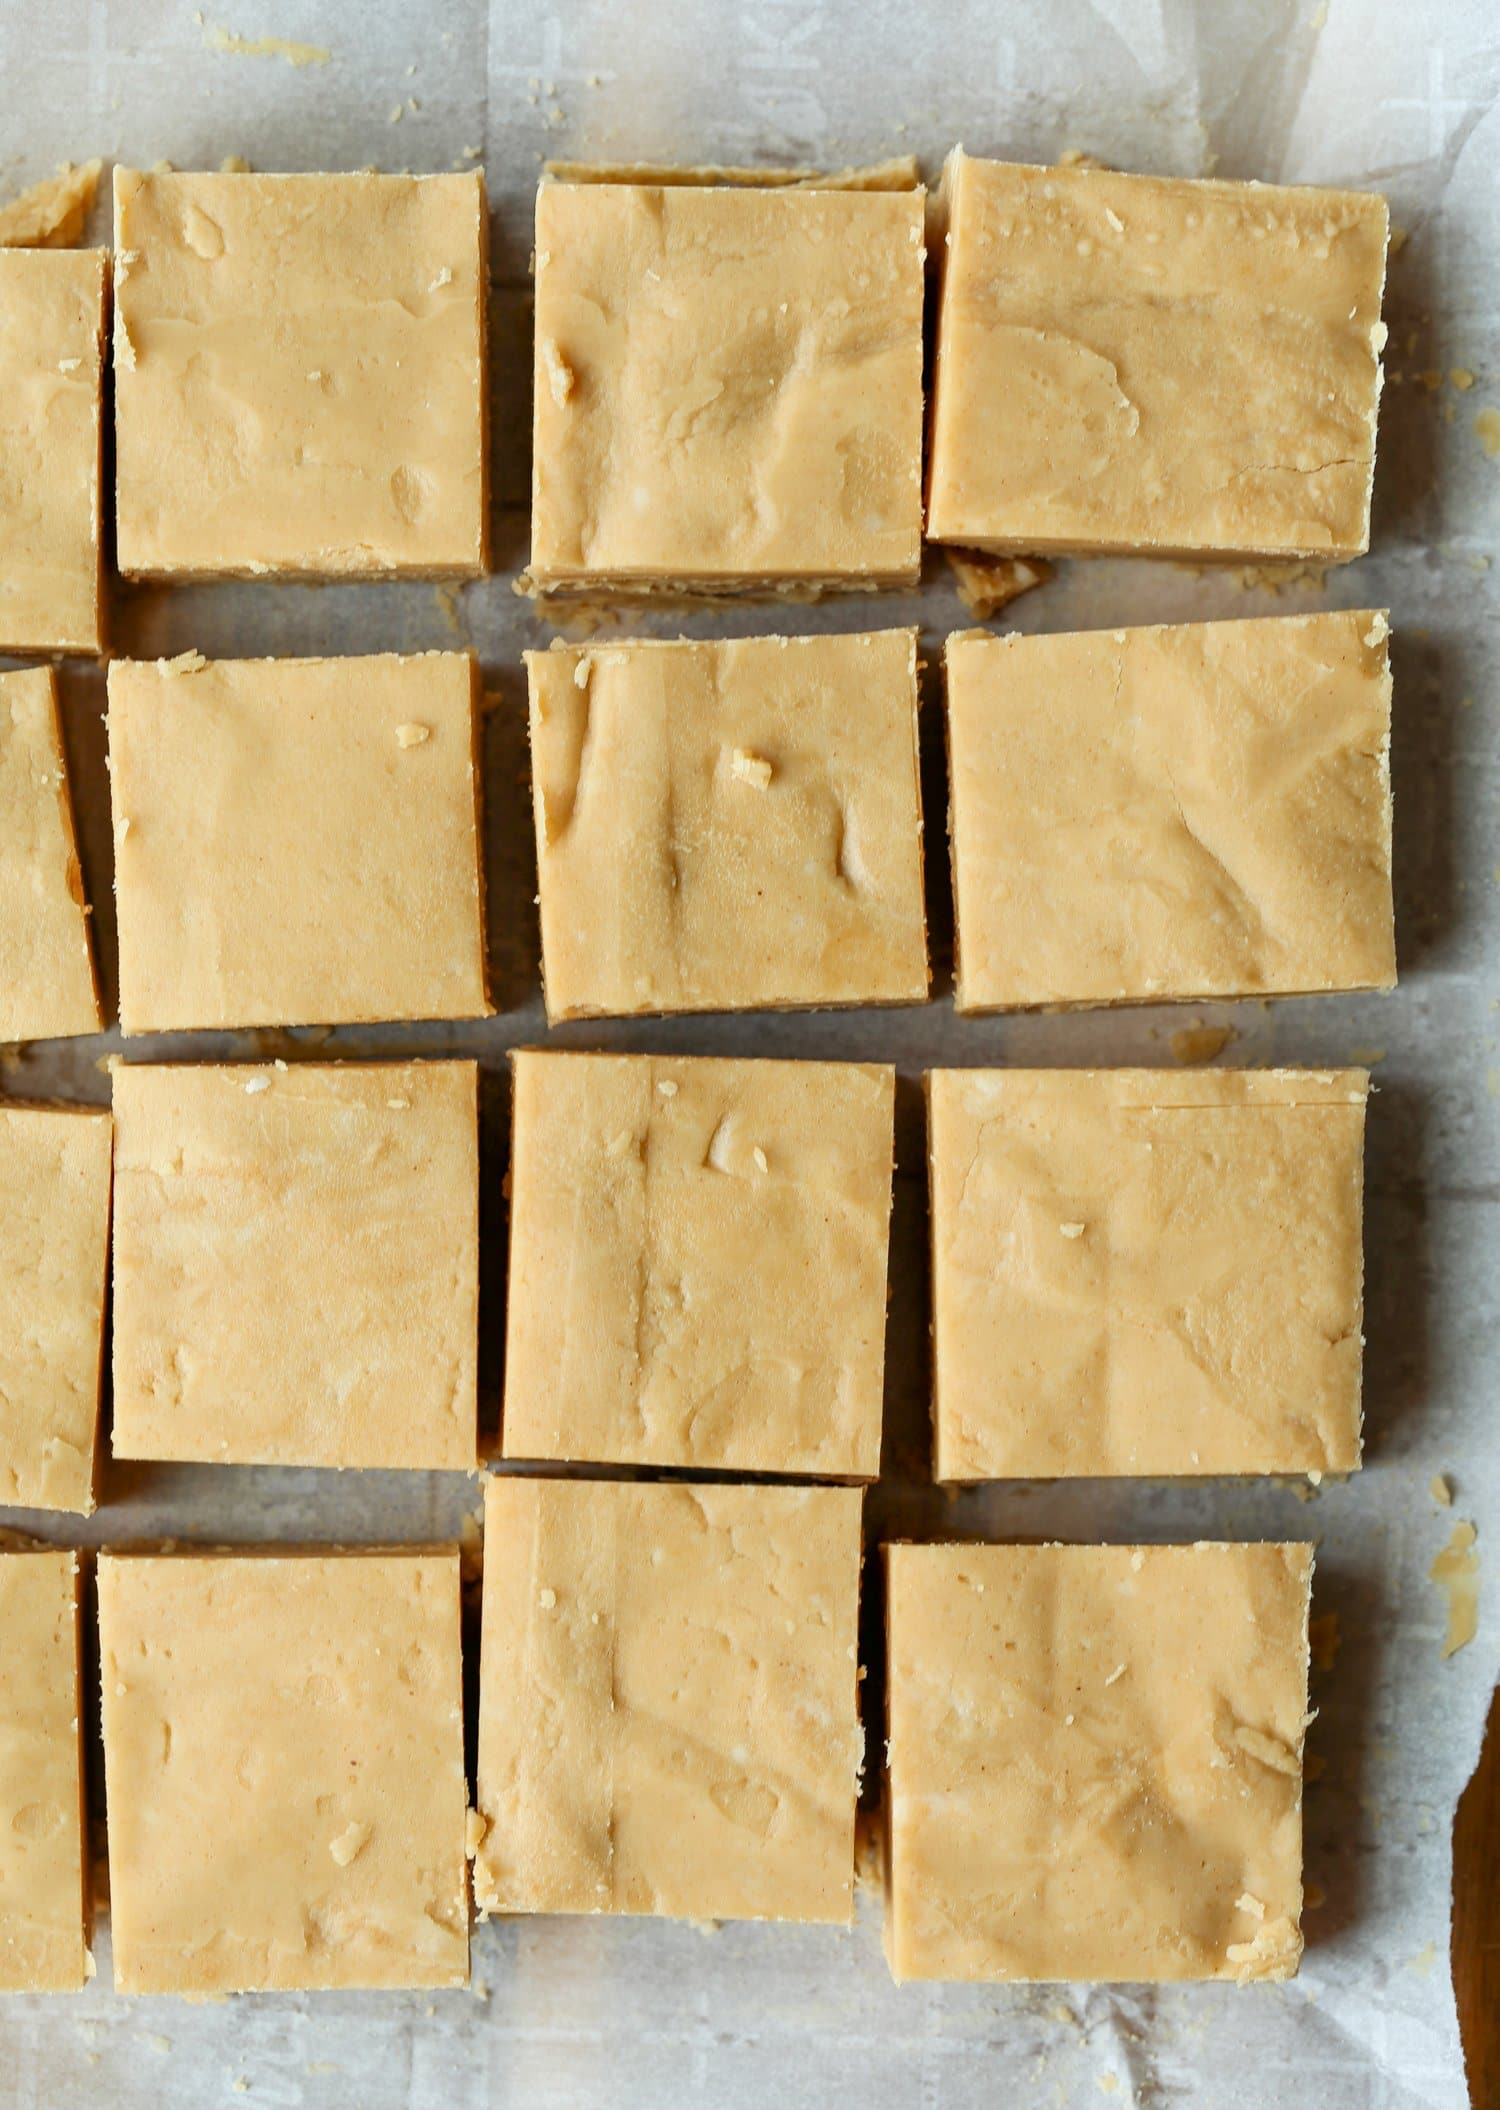 Top view of peanut butter fudge on parchment paper cut into squares.